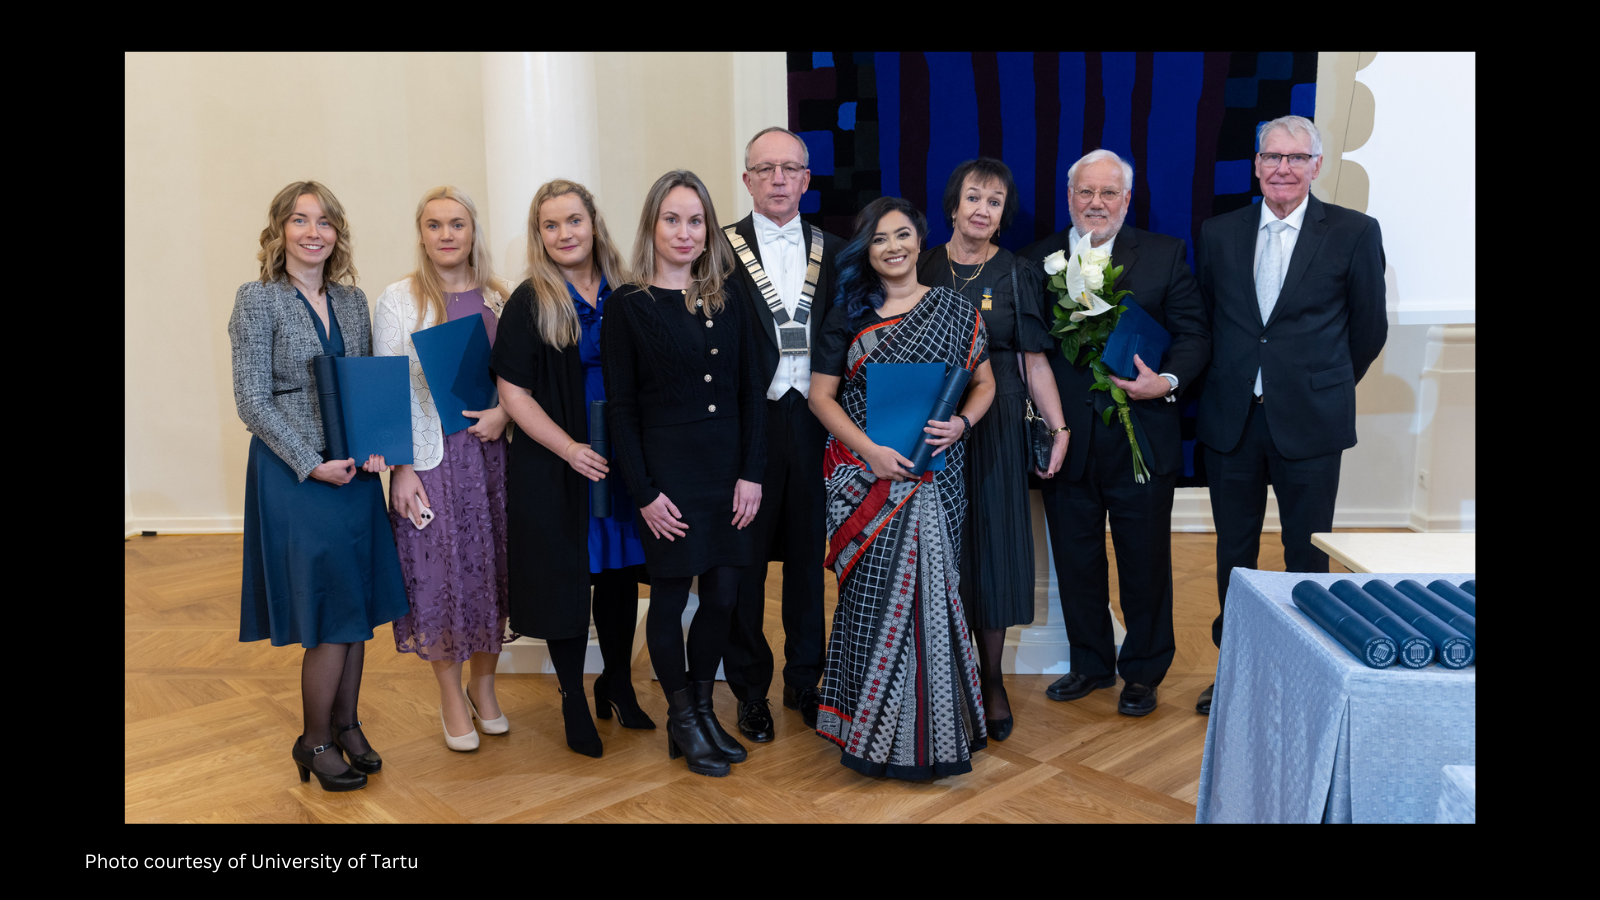 Photo of award winners at University of Tartu event, including Joe Krajcik